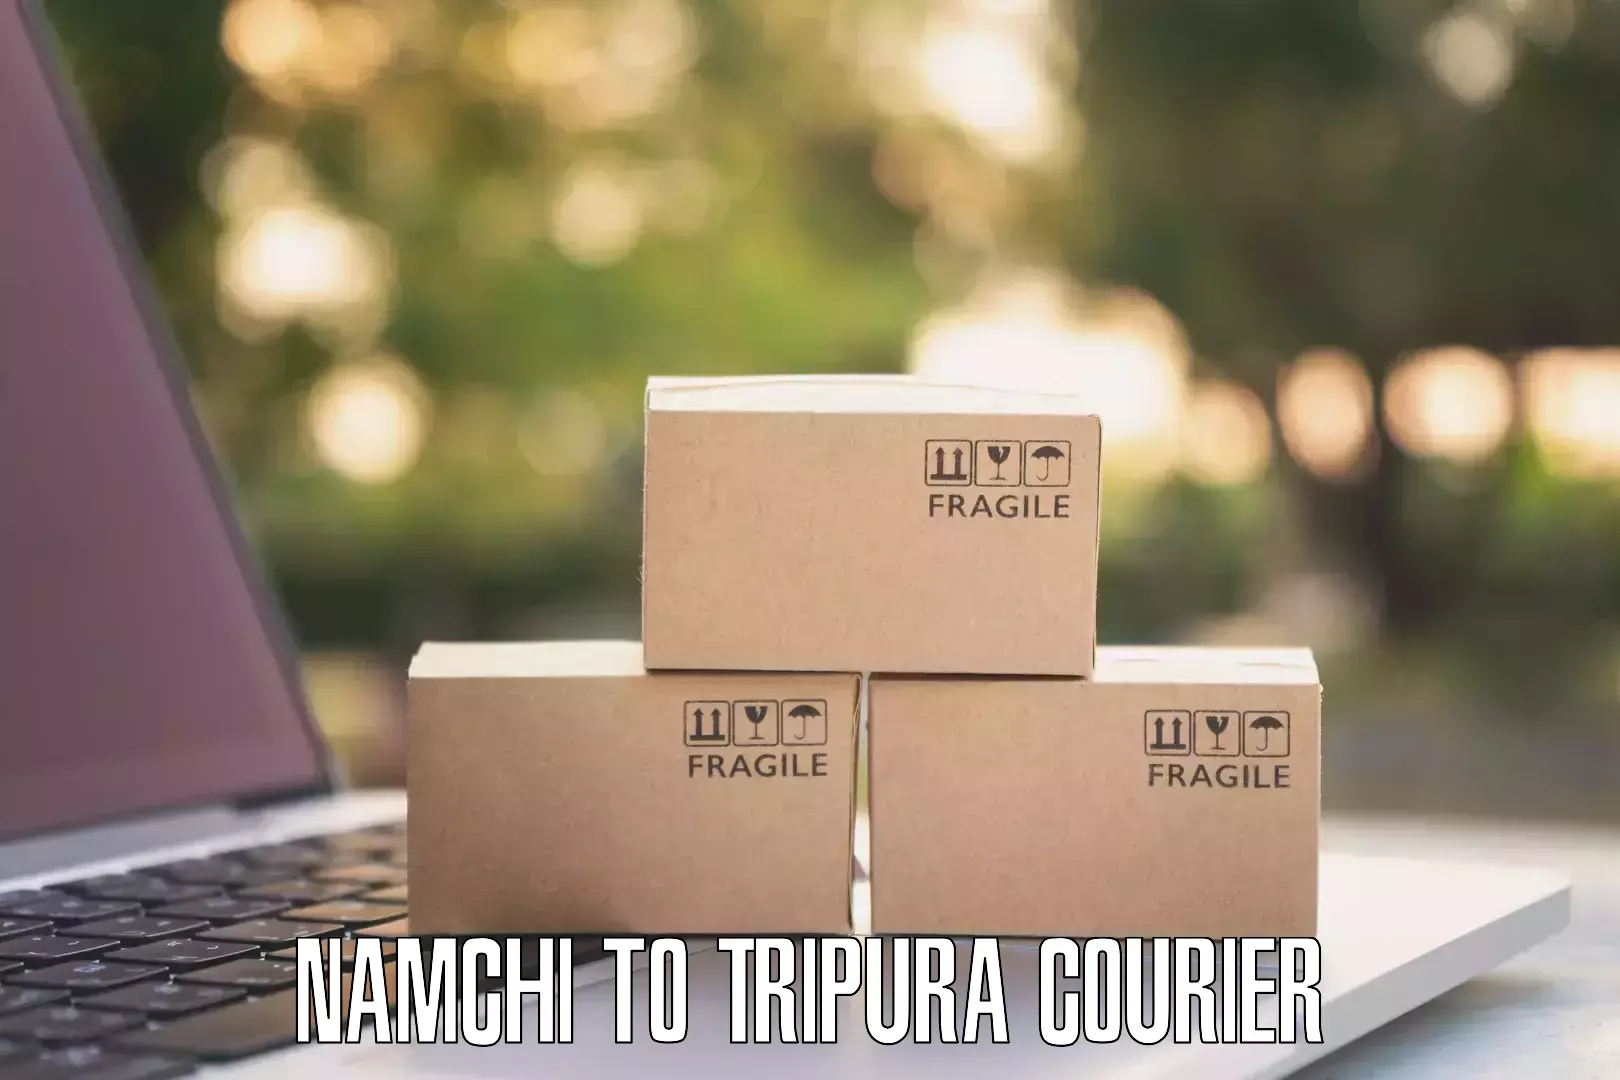 Multi-city courier Namchi to South Tripura